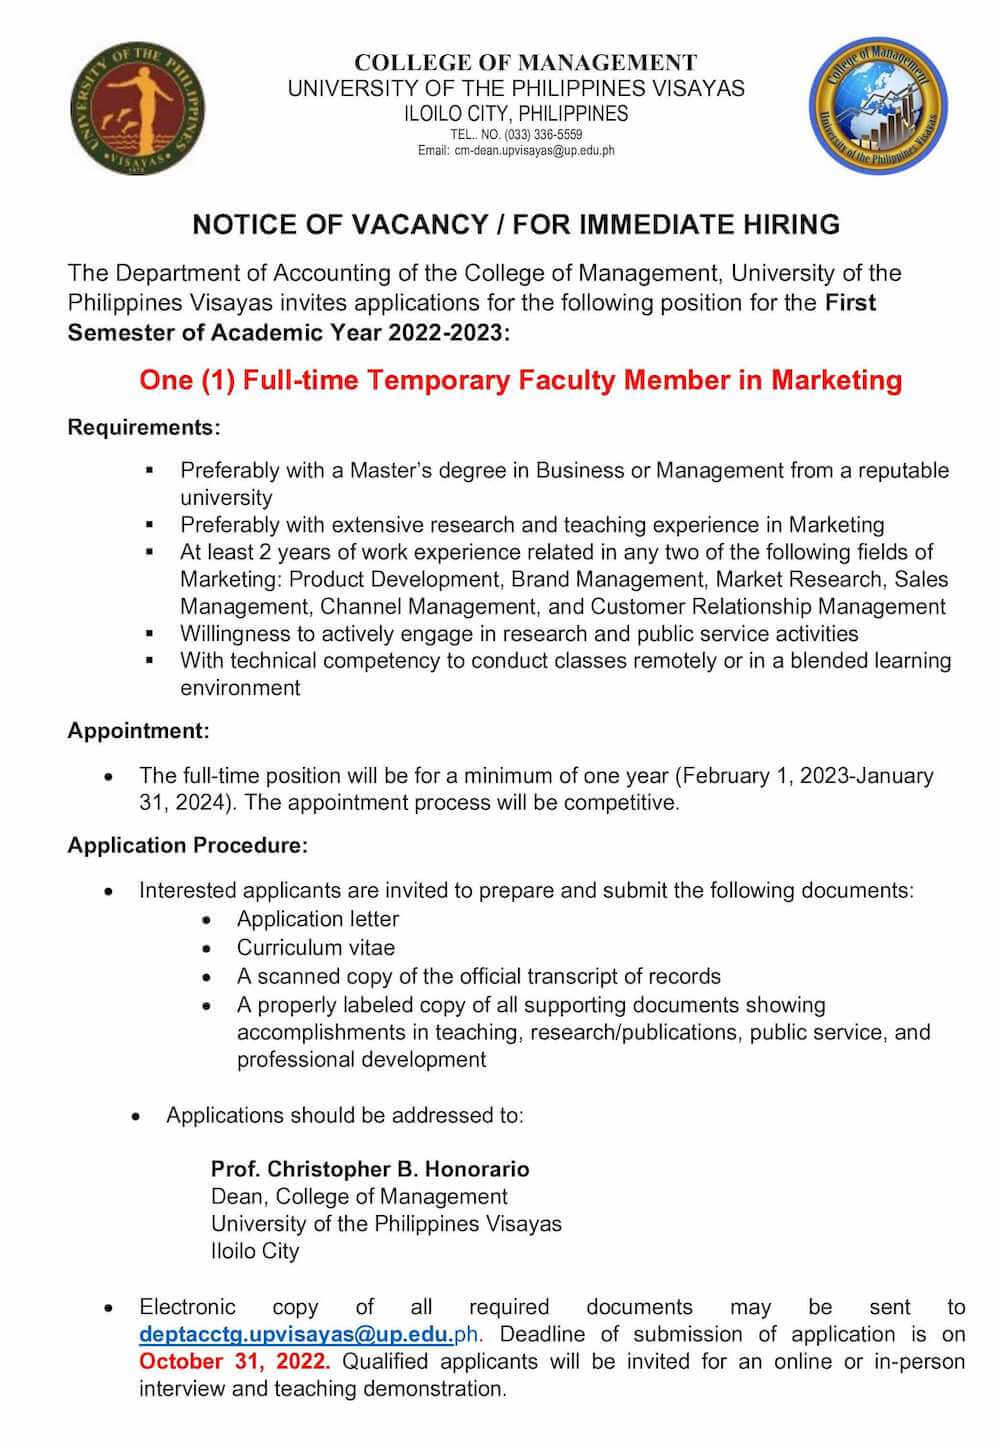 hiring faculty cm acctg marketing 1022